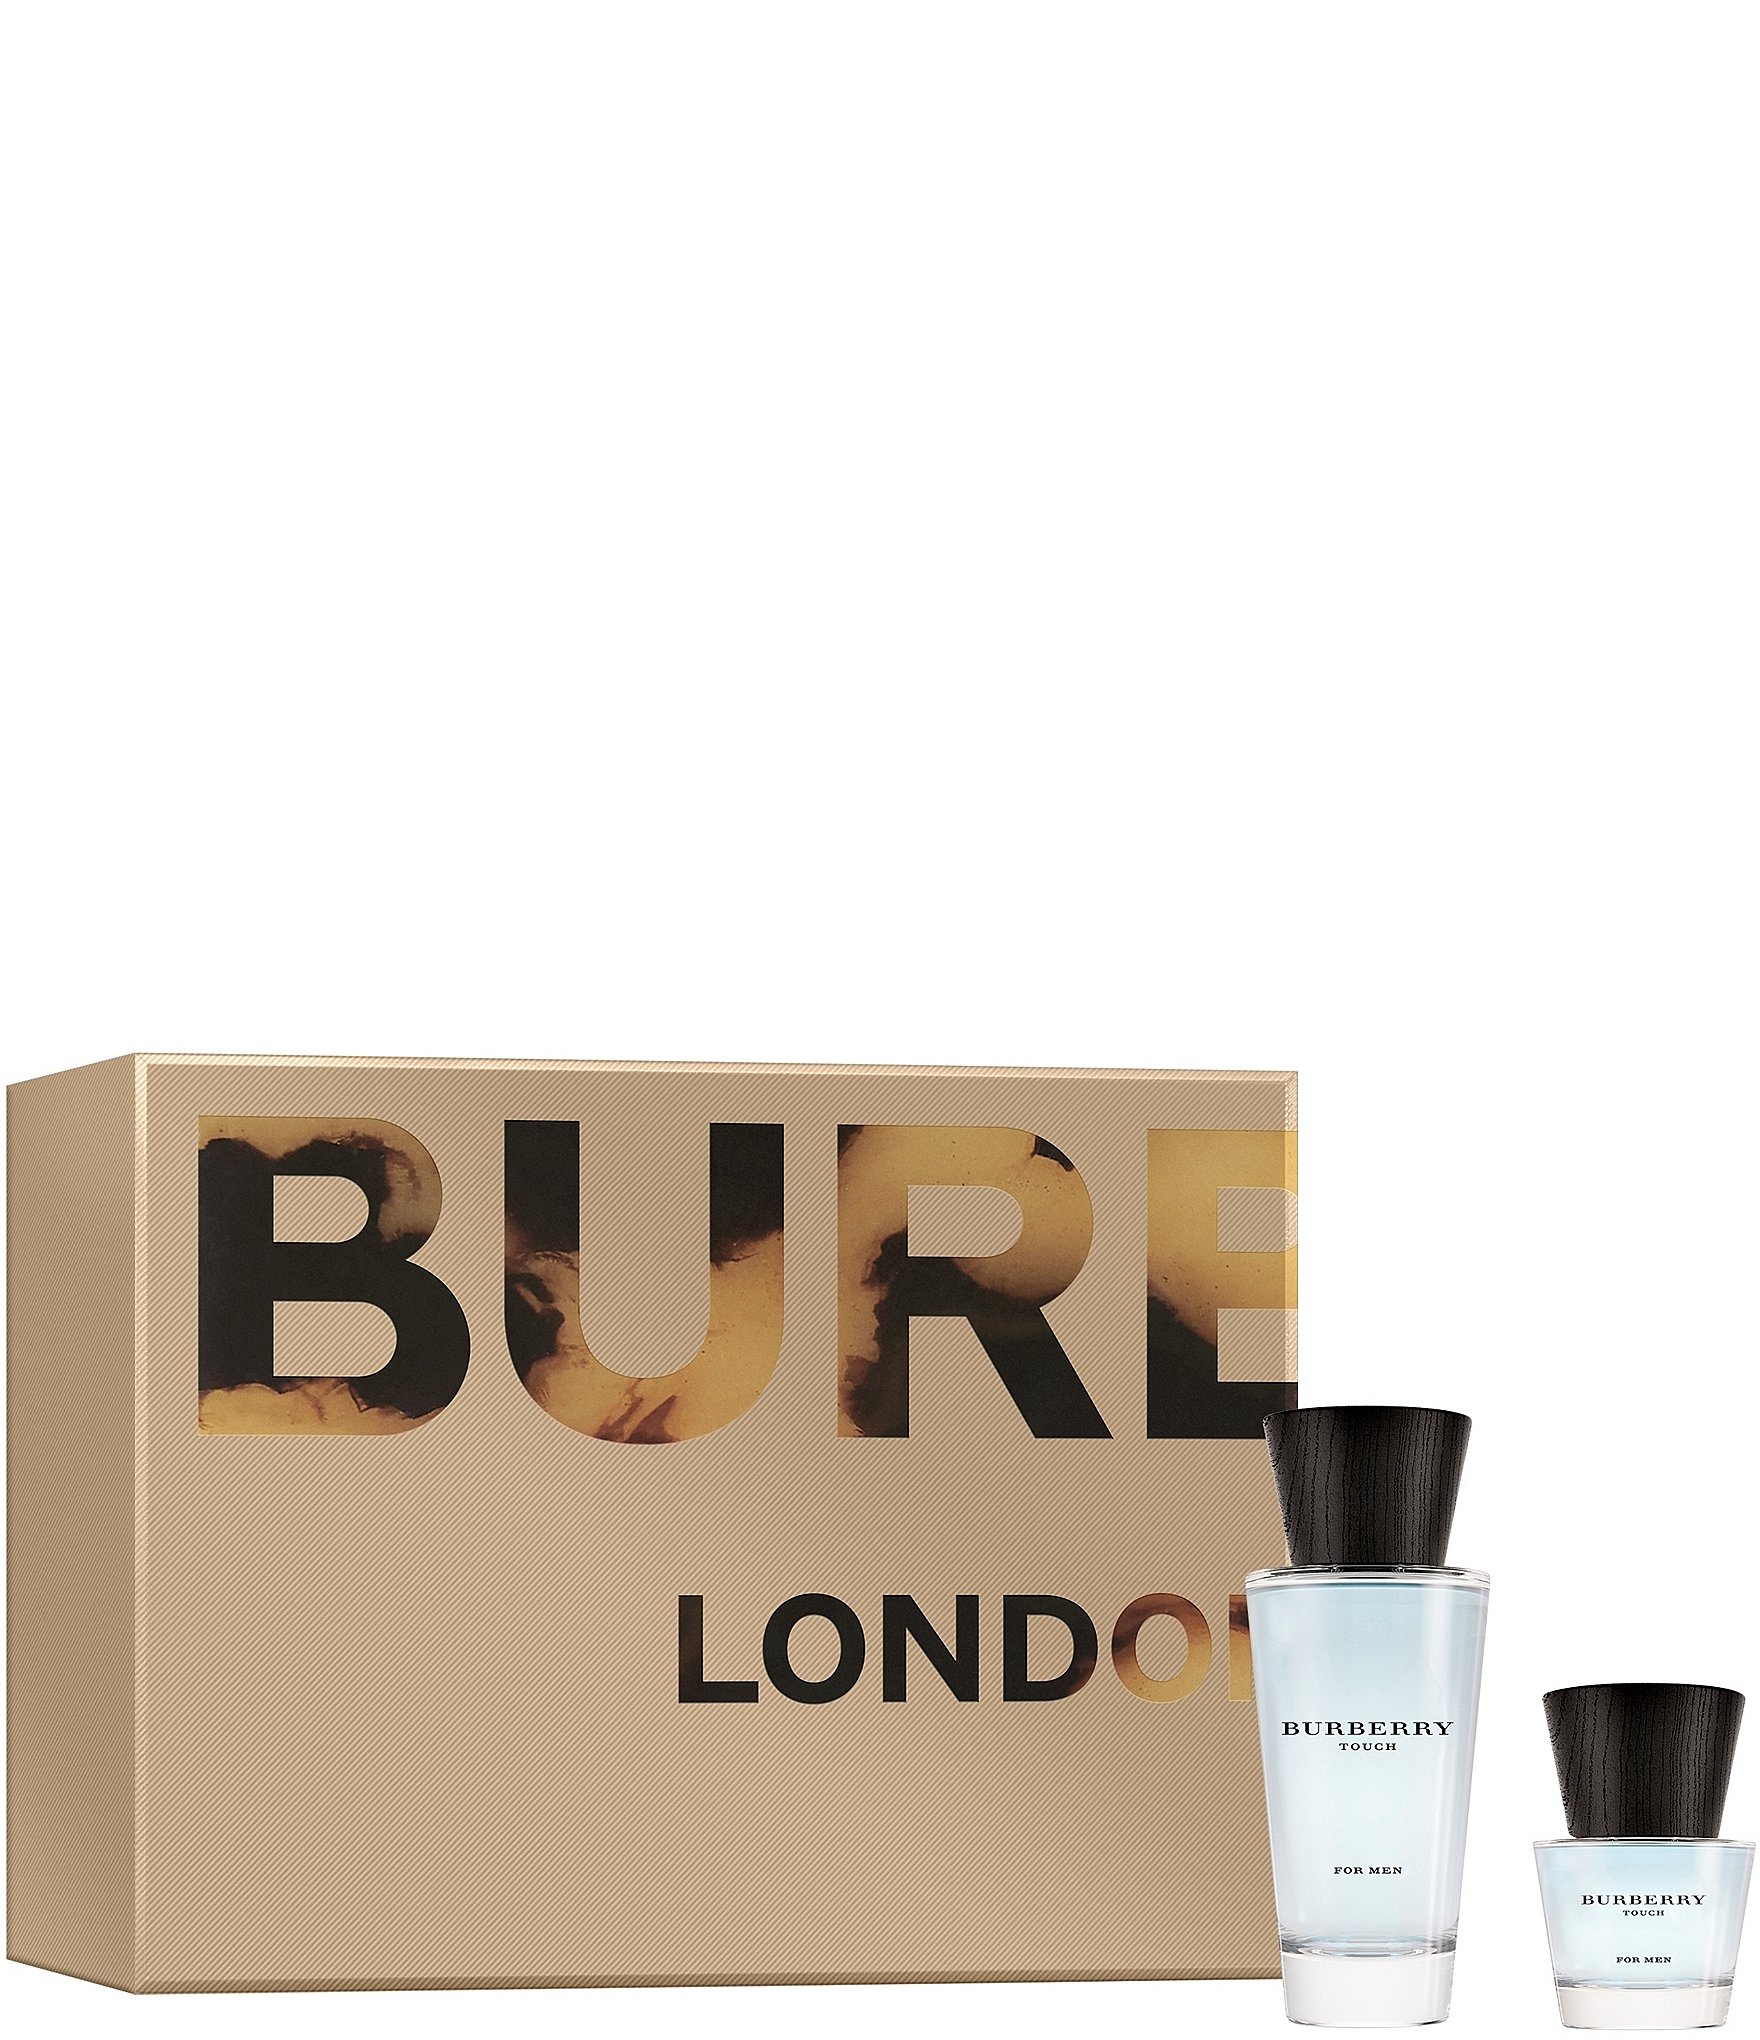 Burberry Men's Cologne & Fragrance | Dillard's